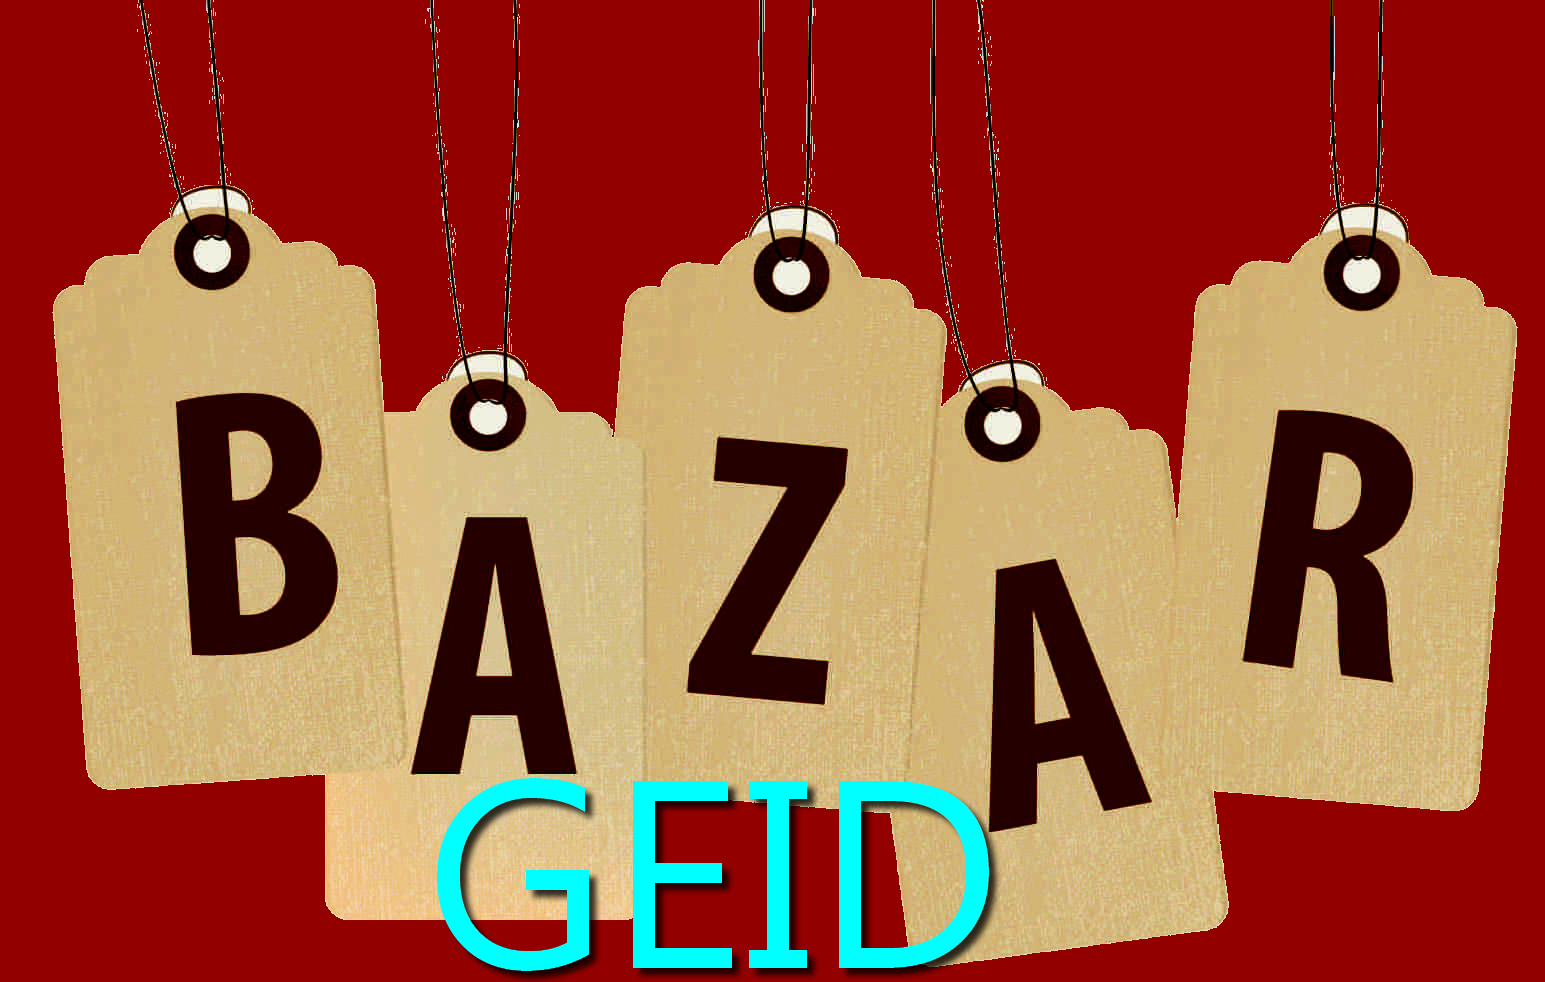 Bazar GEID